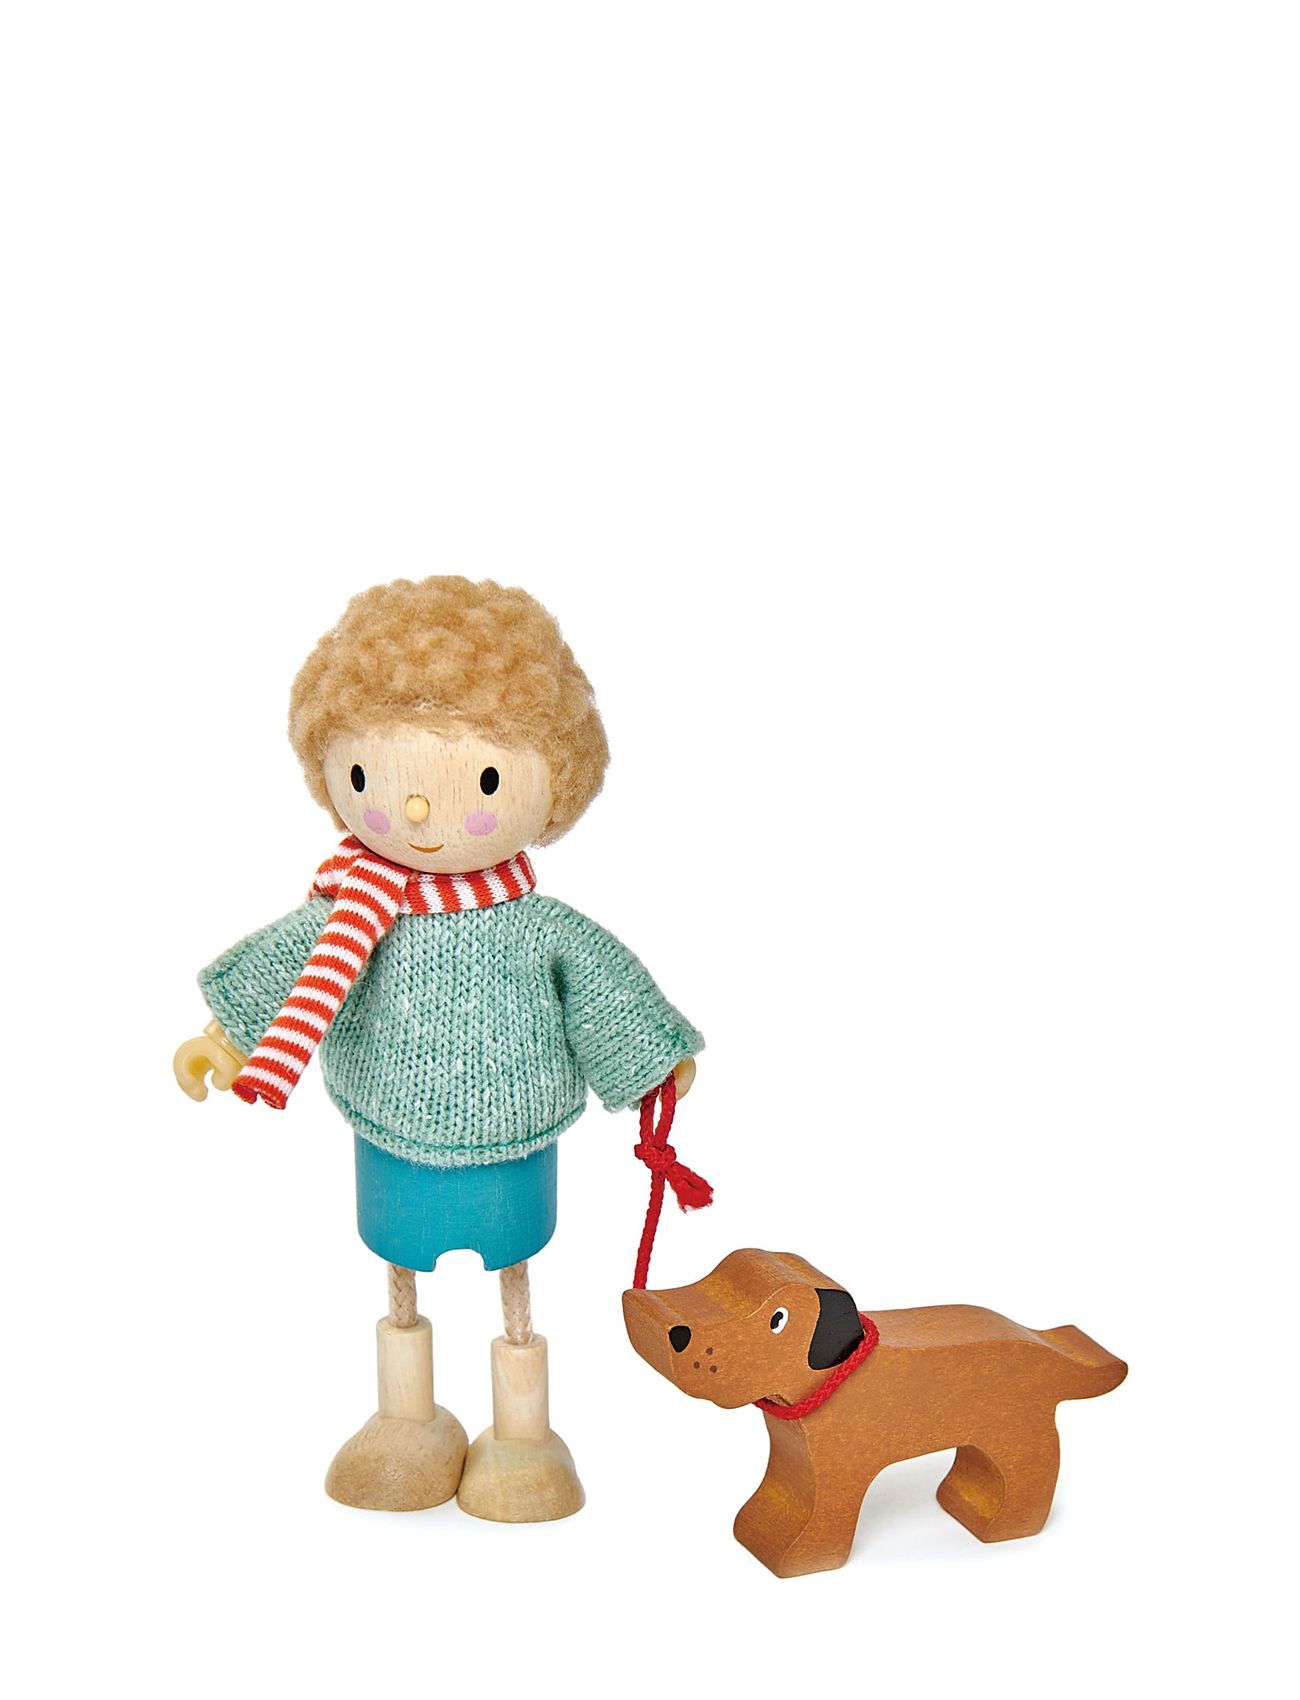 Mr. Goodwood With Dog Toys Playsets & Action Figures Wooden Figures Multi/patterned Tender Leaf